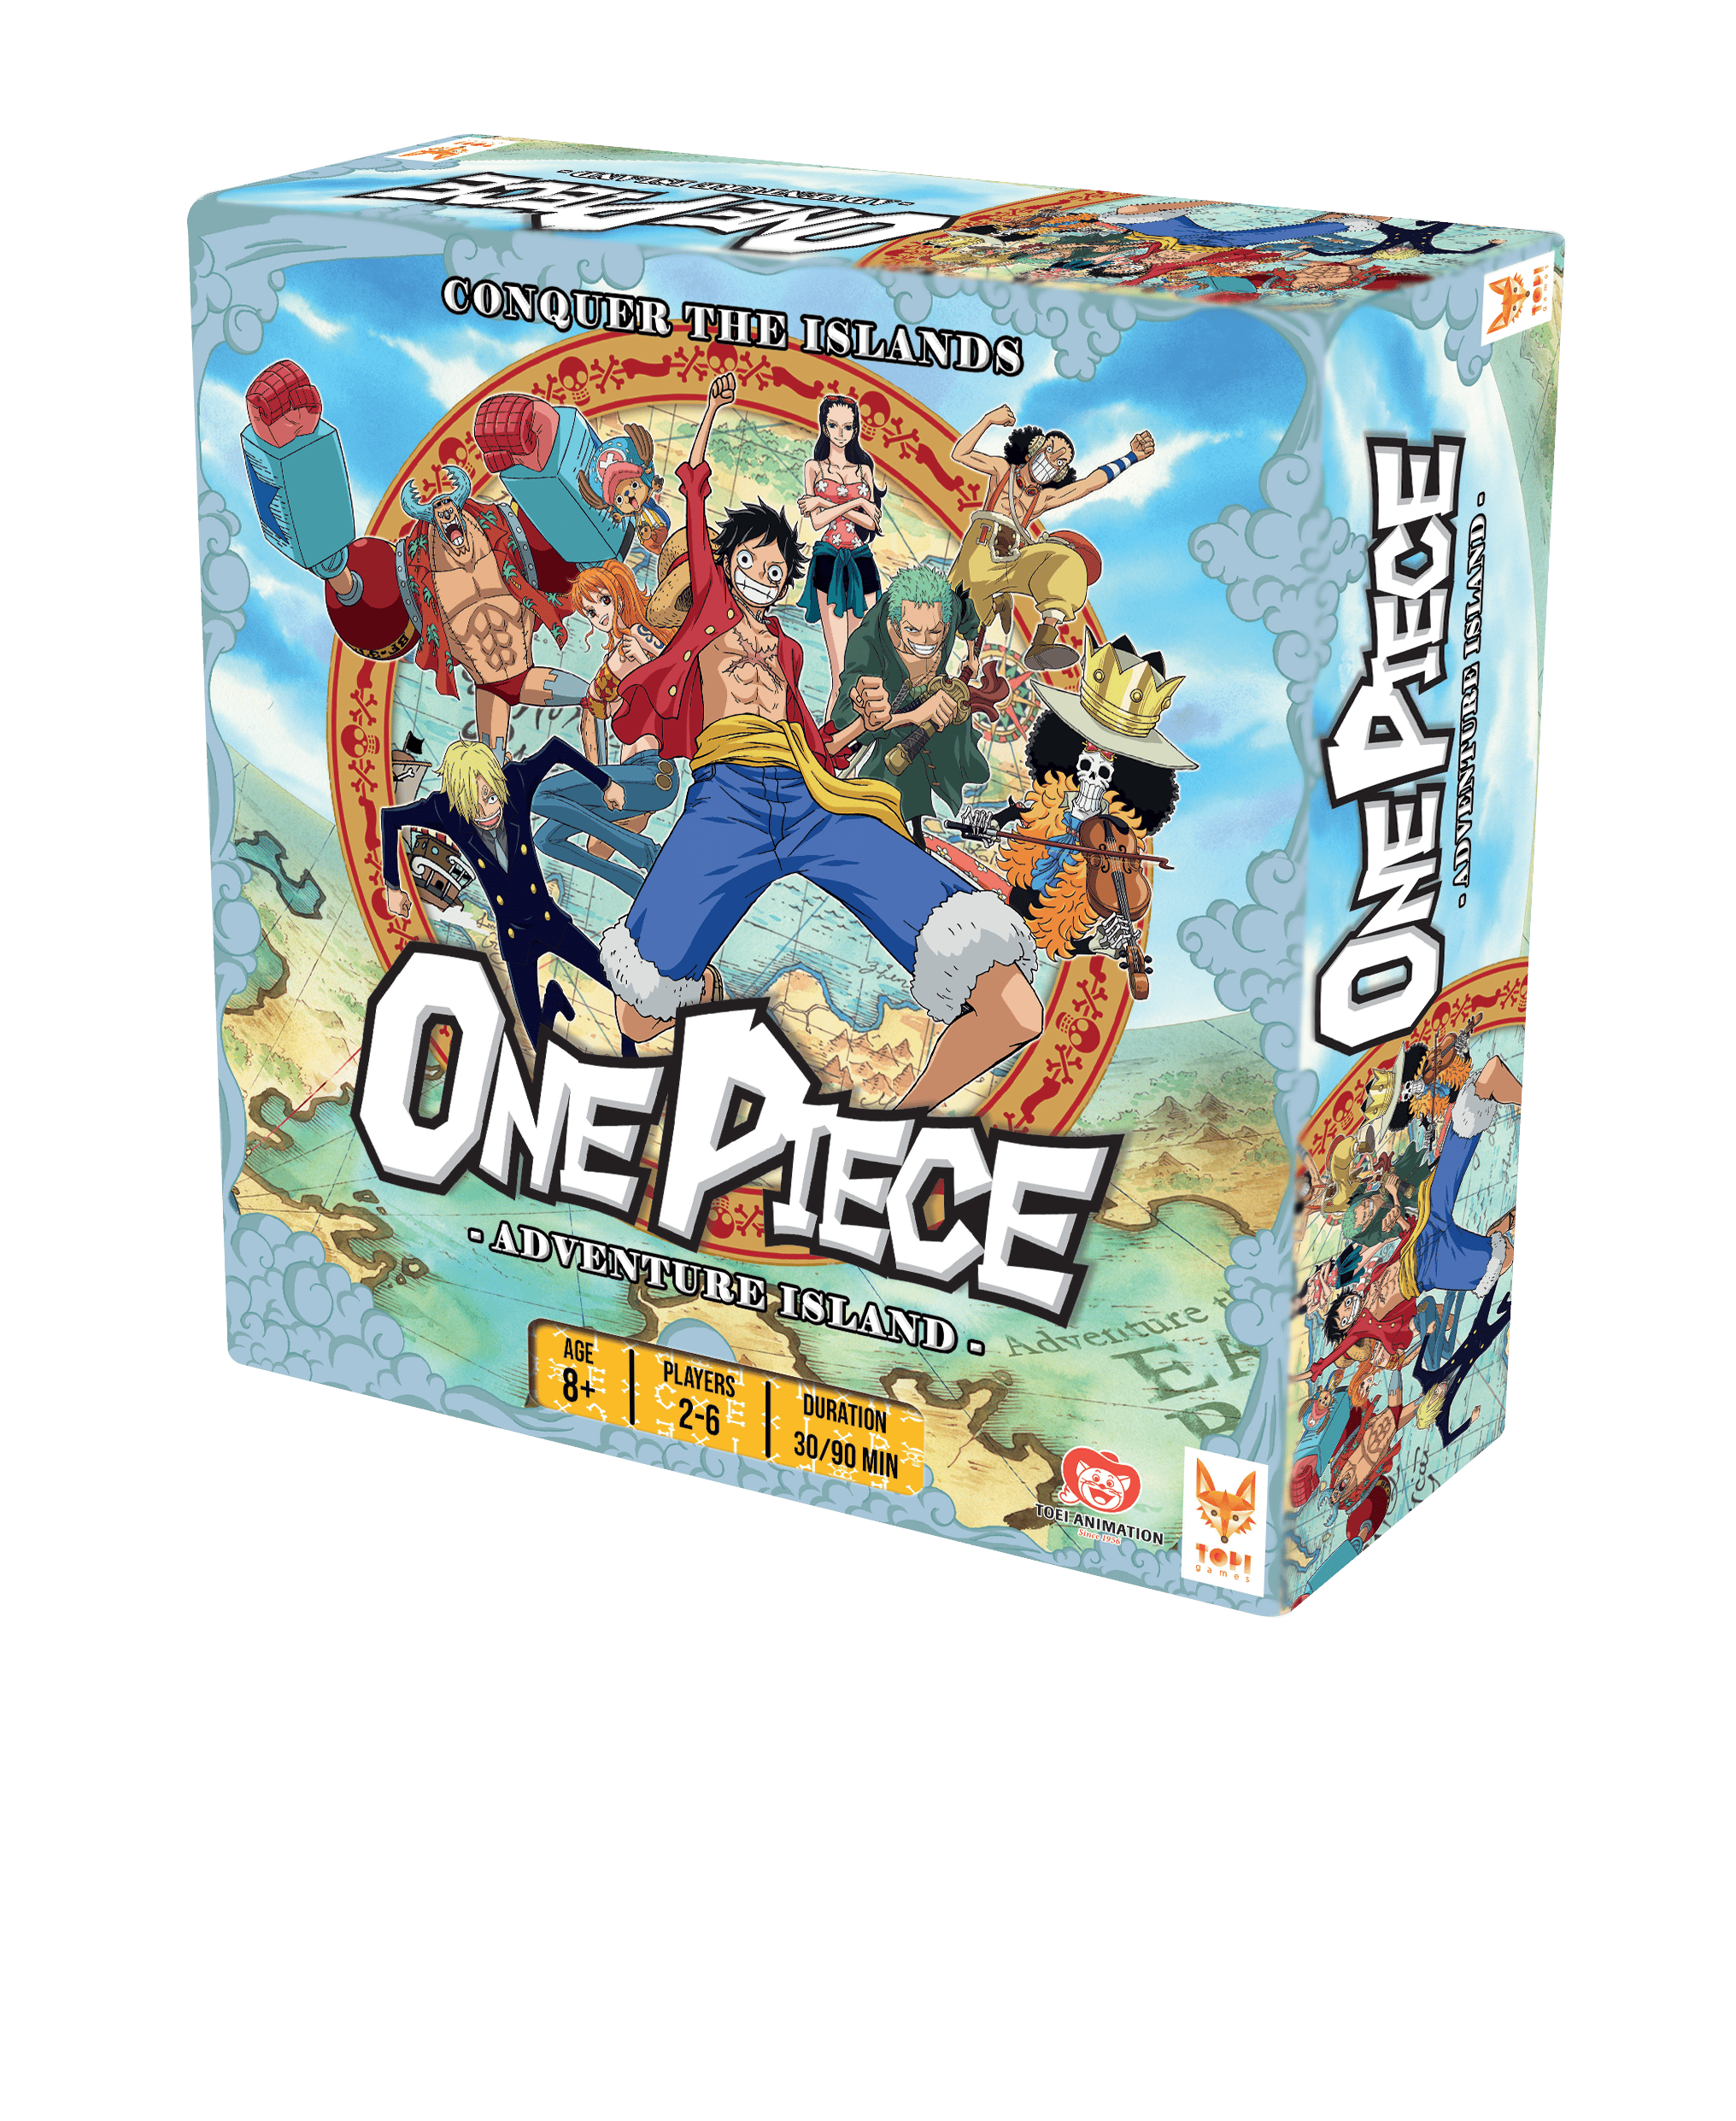 One Piece - Adventure Island Game box